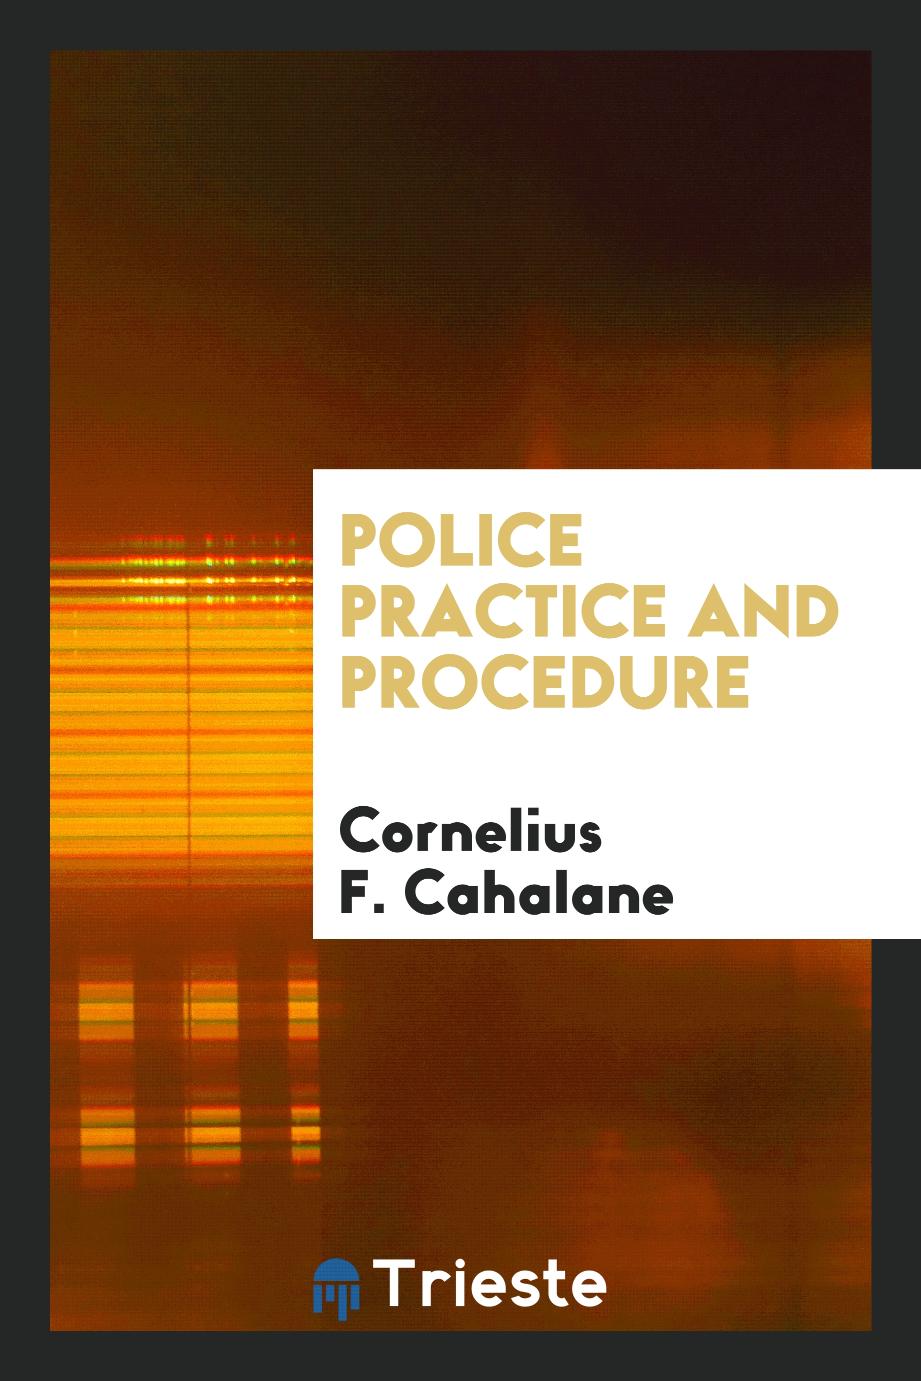 Police practice and procedure